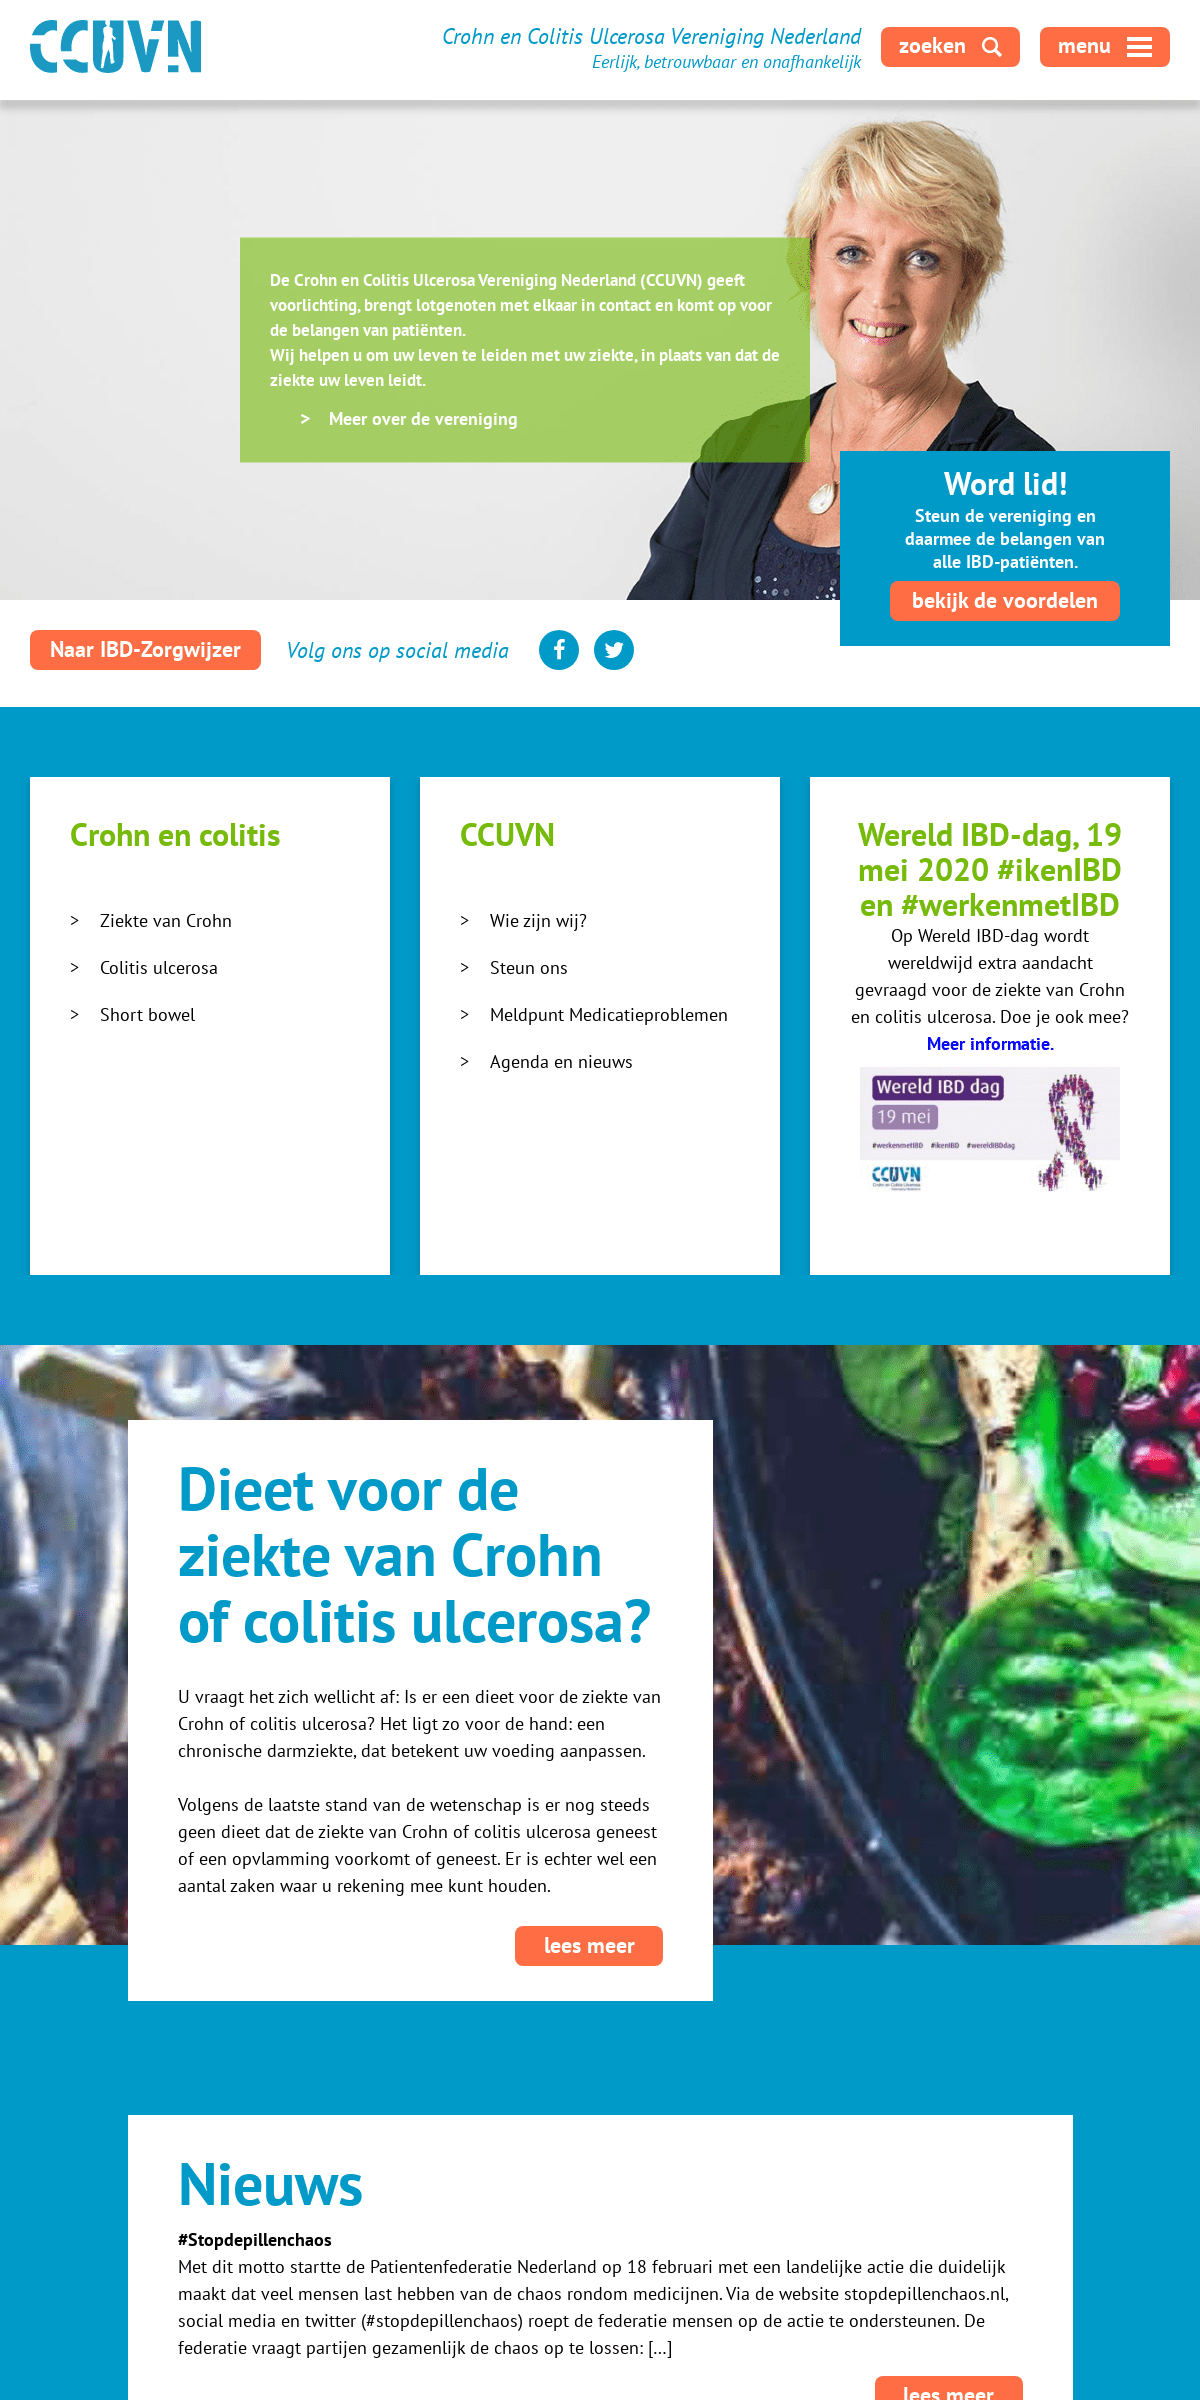 A complete backup of crohn-colitis.nl